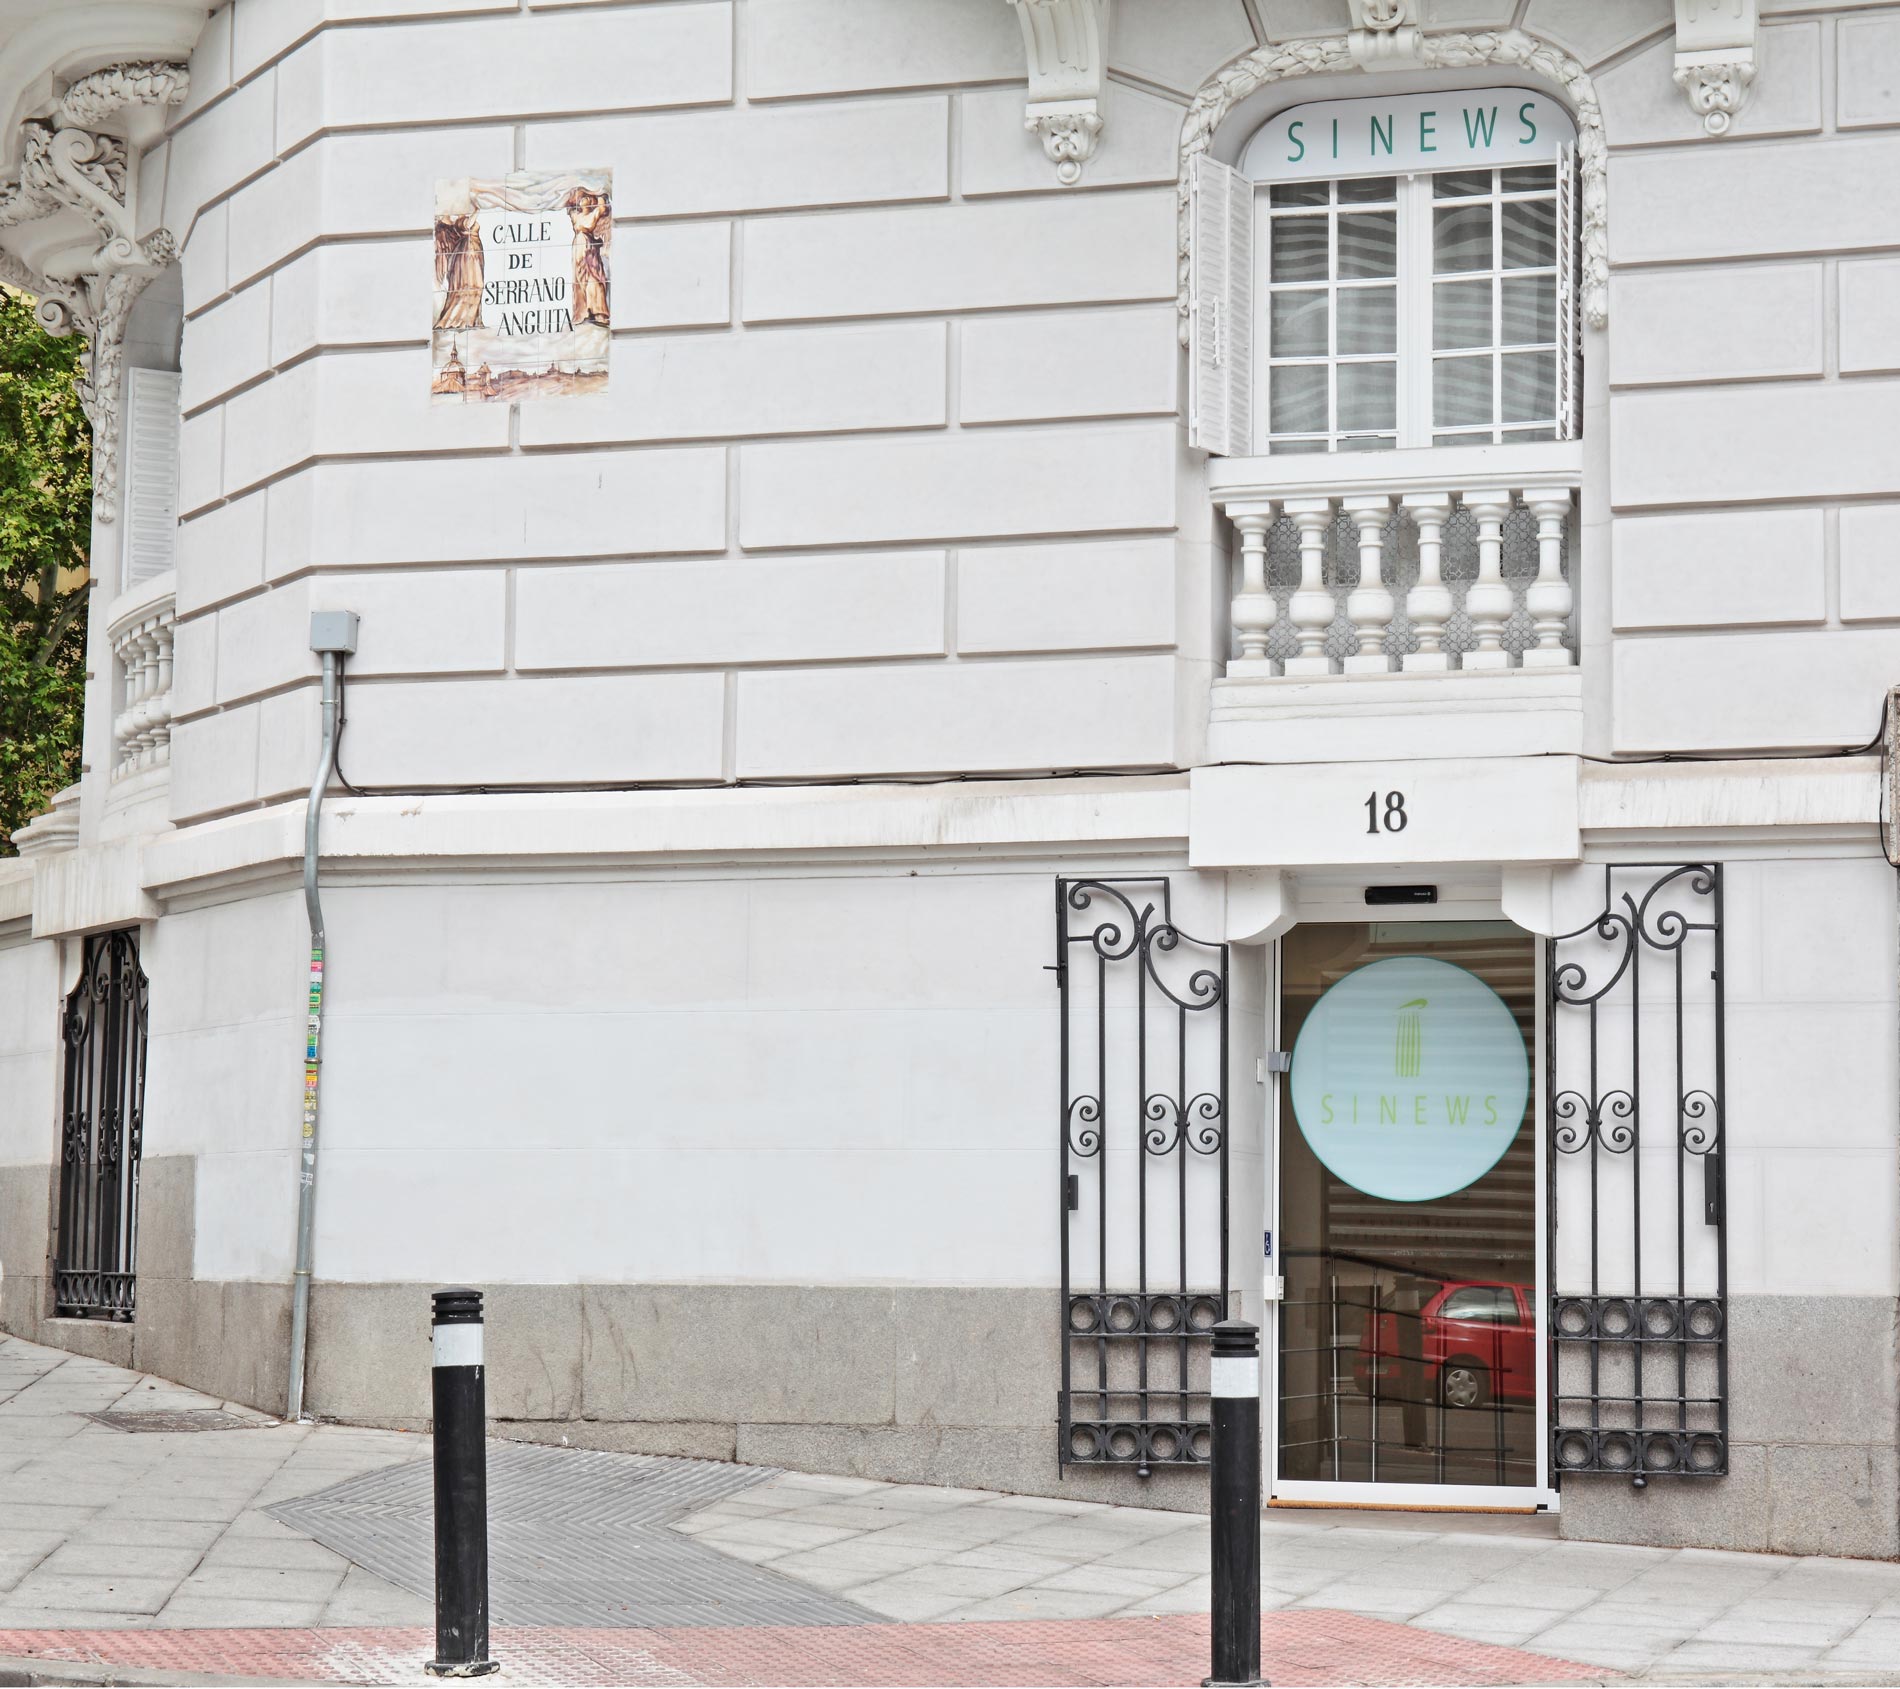 Sinews MTI - Centro de Terapia Multilingüe en Madrid